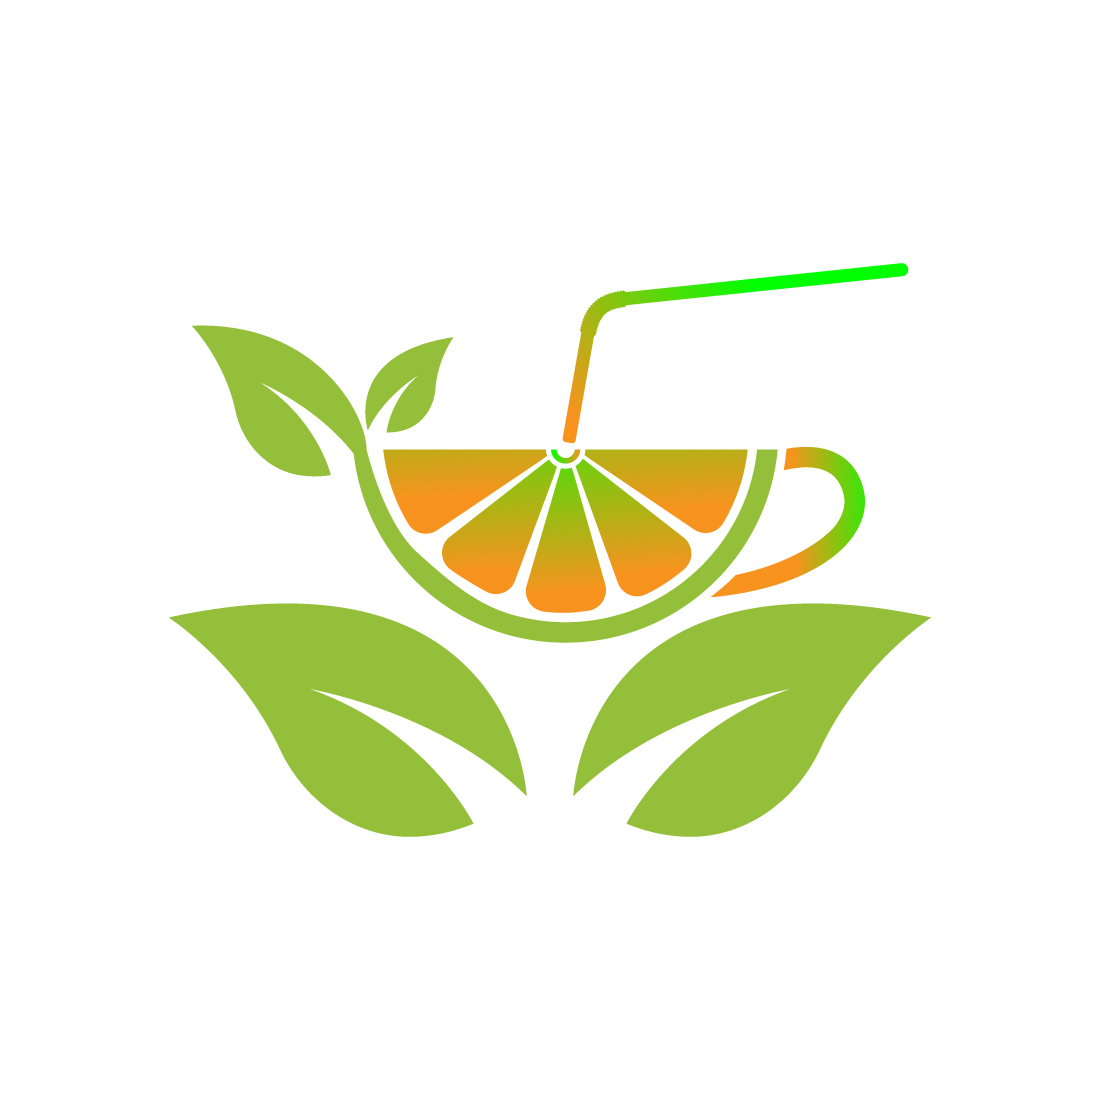 Lemon juice logo design vector images lemon Fresh Fruit logo template icon design cover image.